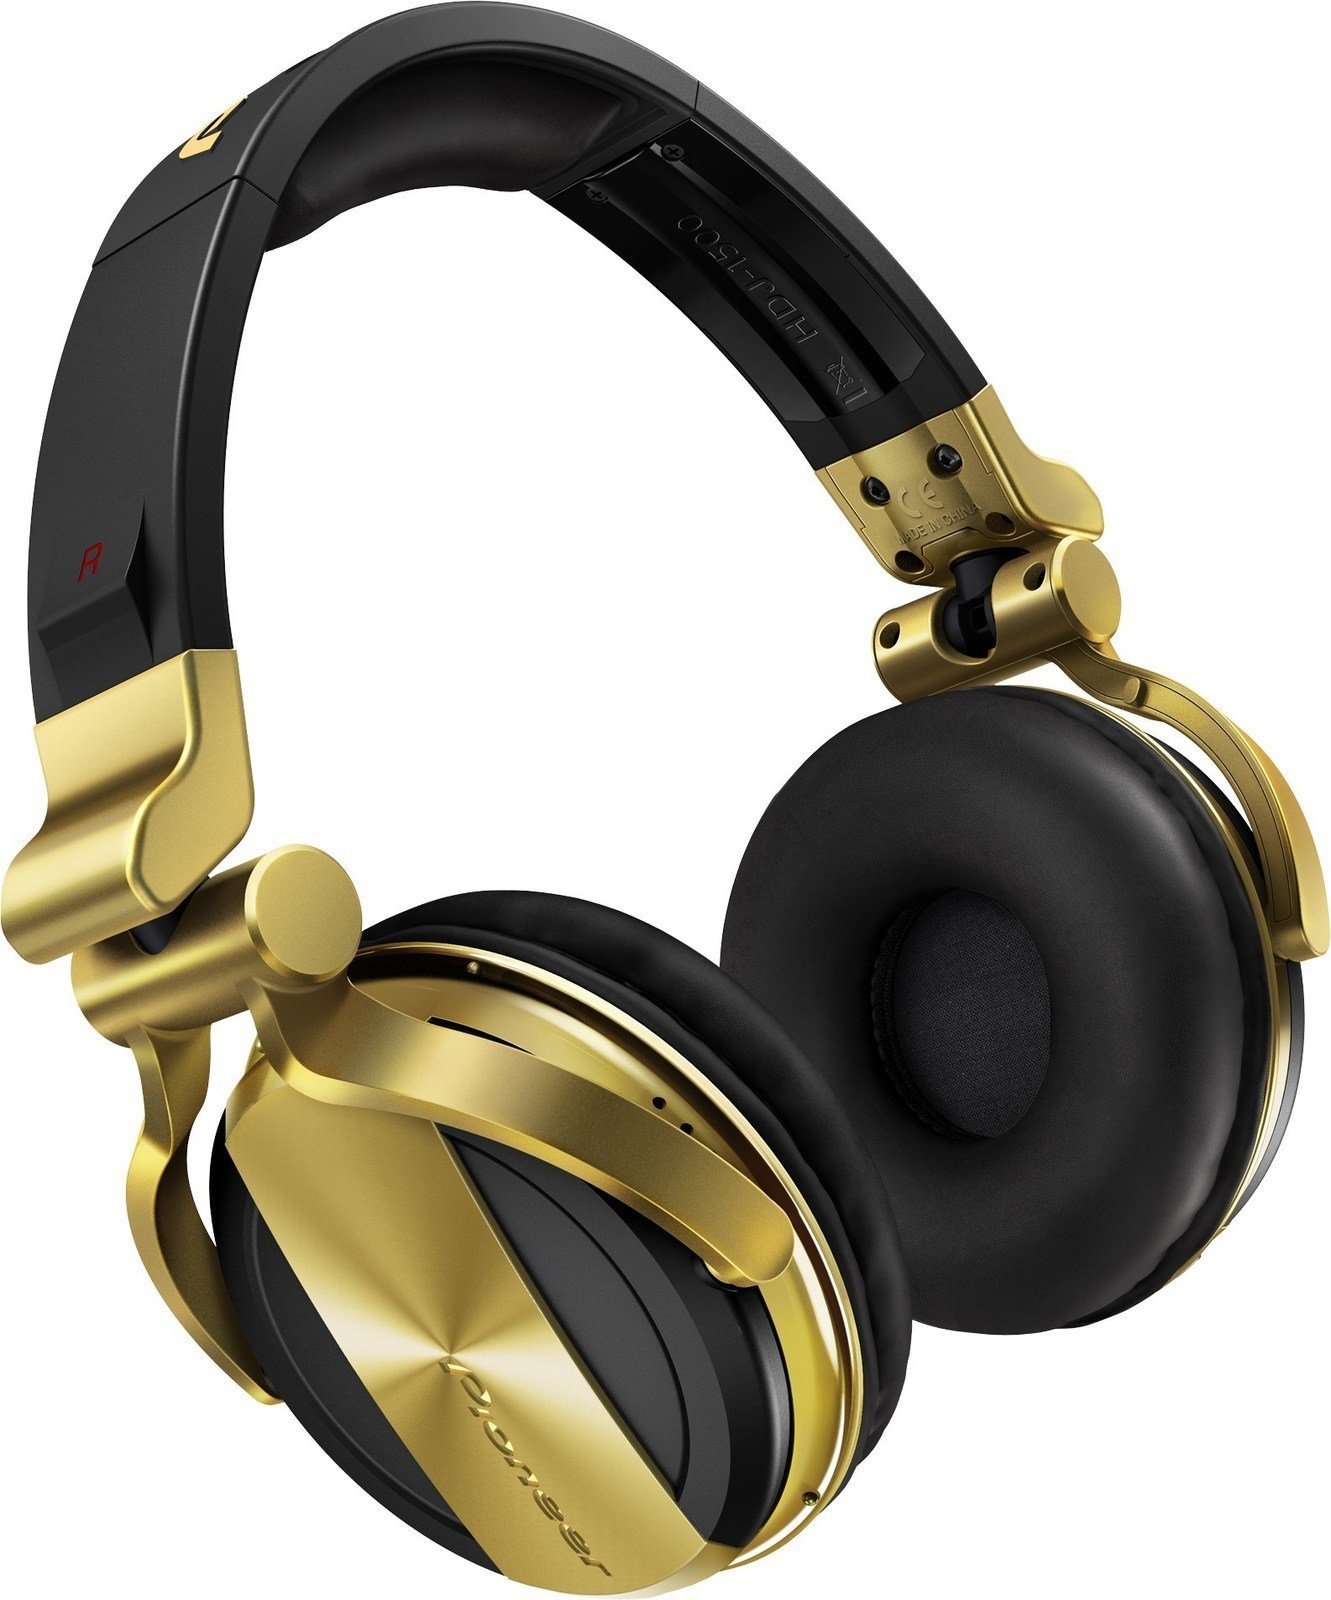 DJ Headphone Pioneer Dj HDJ-1500-N Gold